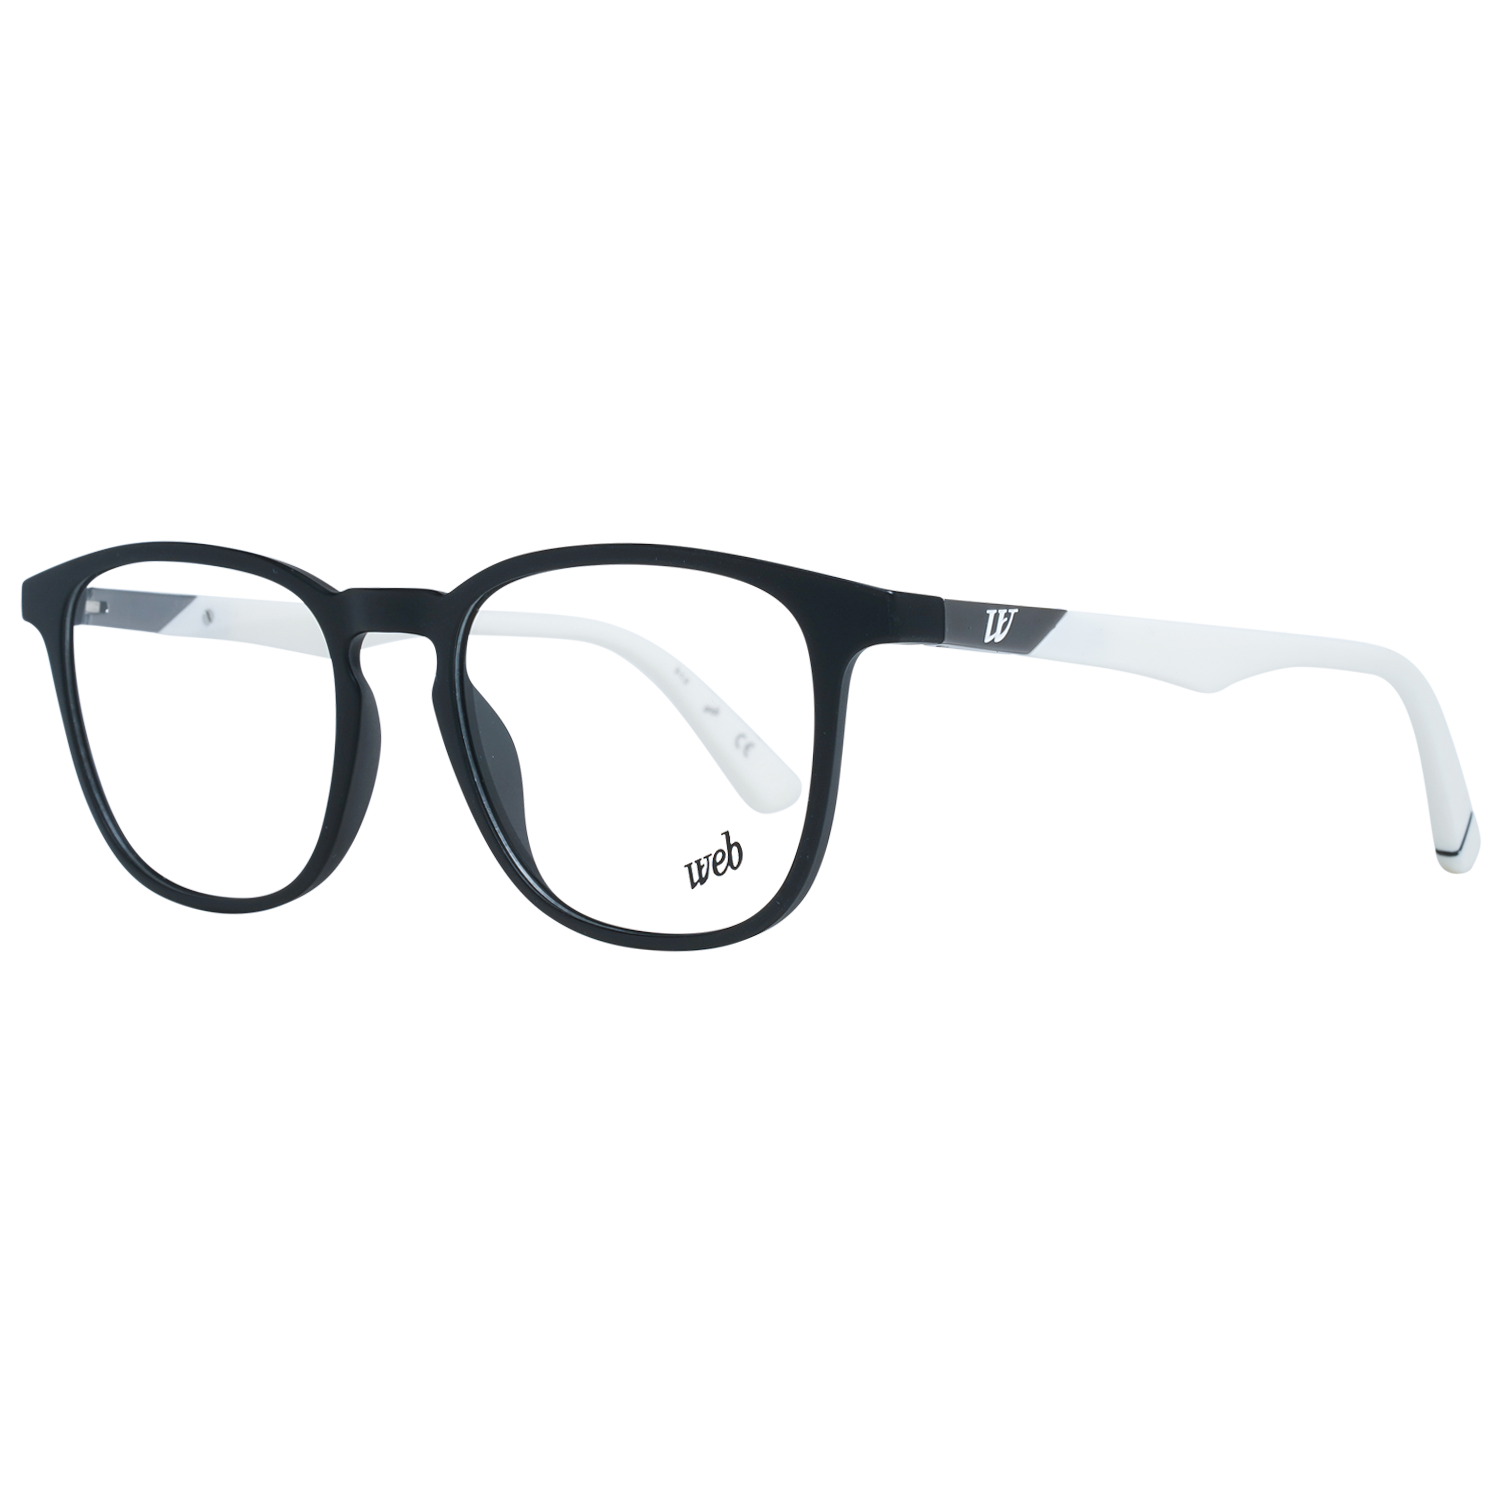 Web Frames Web Prescription Glasses Optical Frame WE5327 005 52 Eyeglasses Eyewear UK USA Australia 